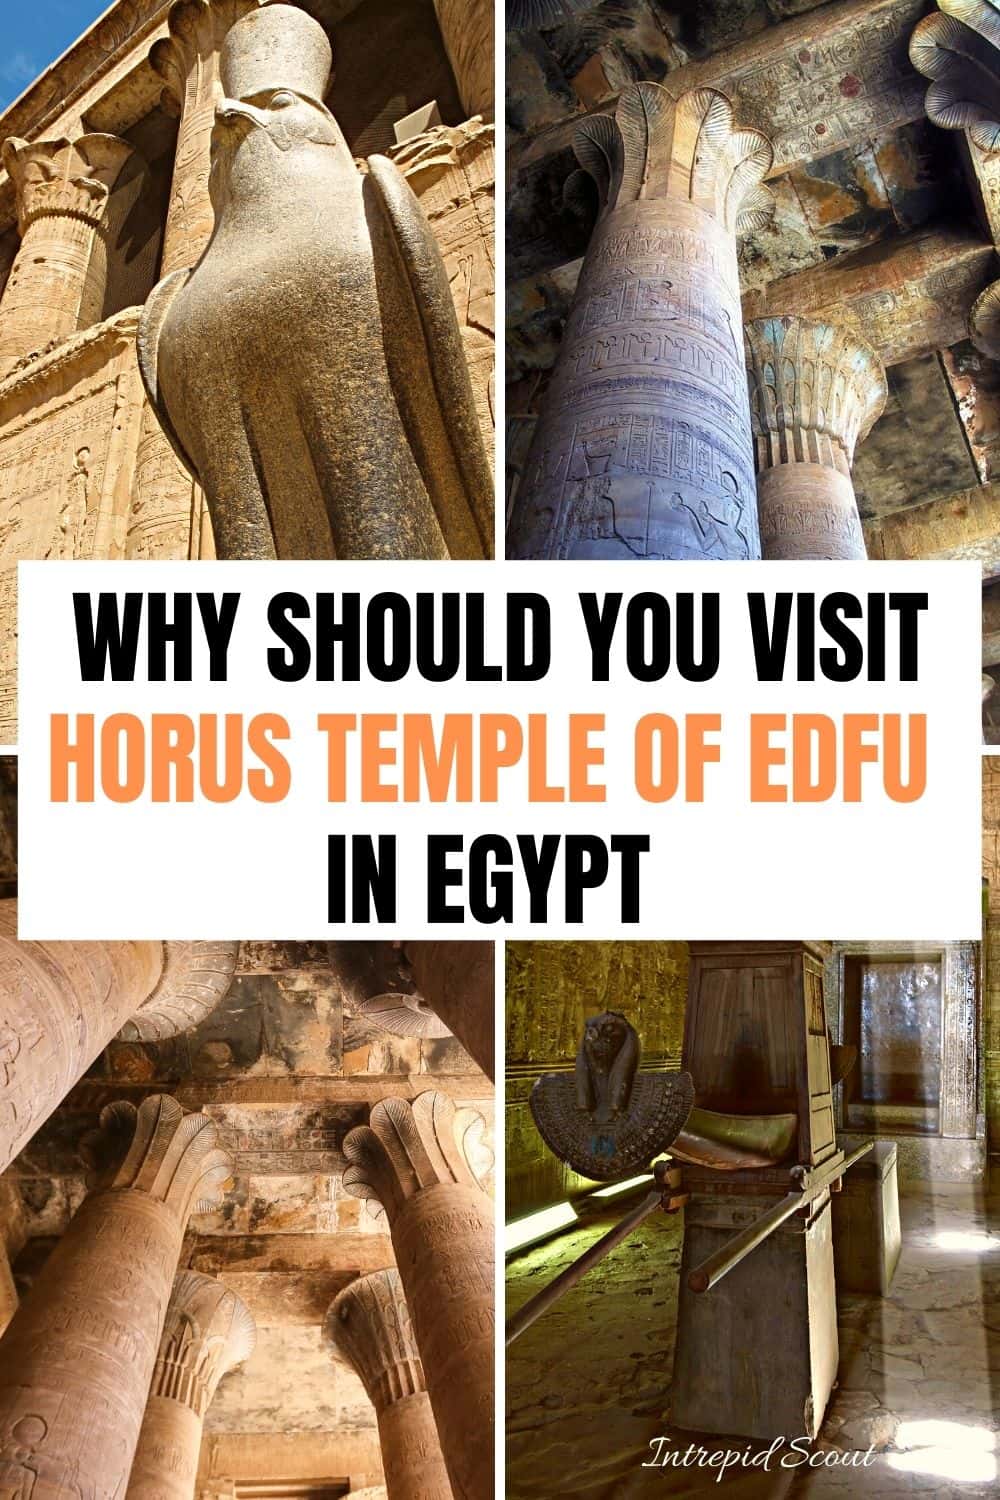 Why Should You Visit Horus Temple of Edfu